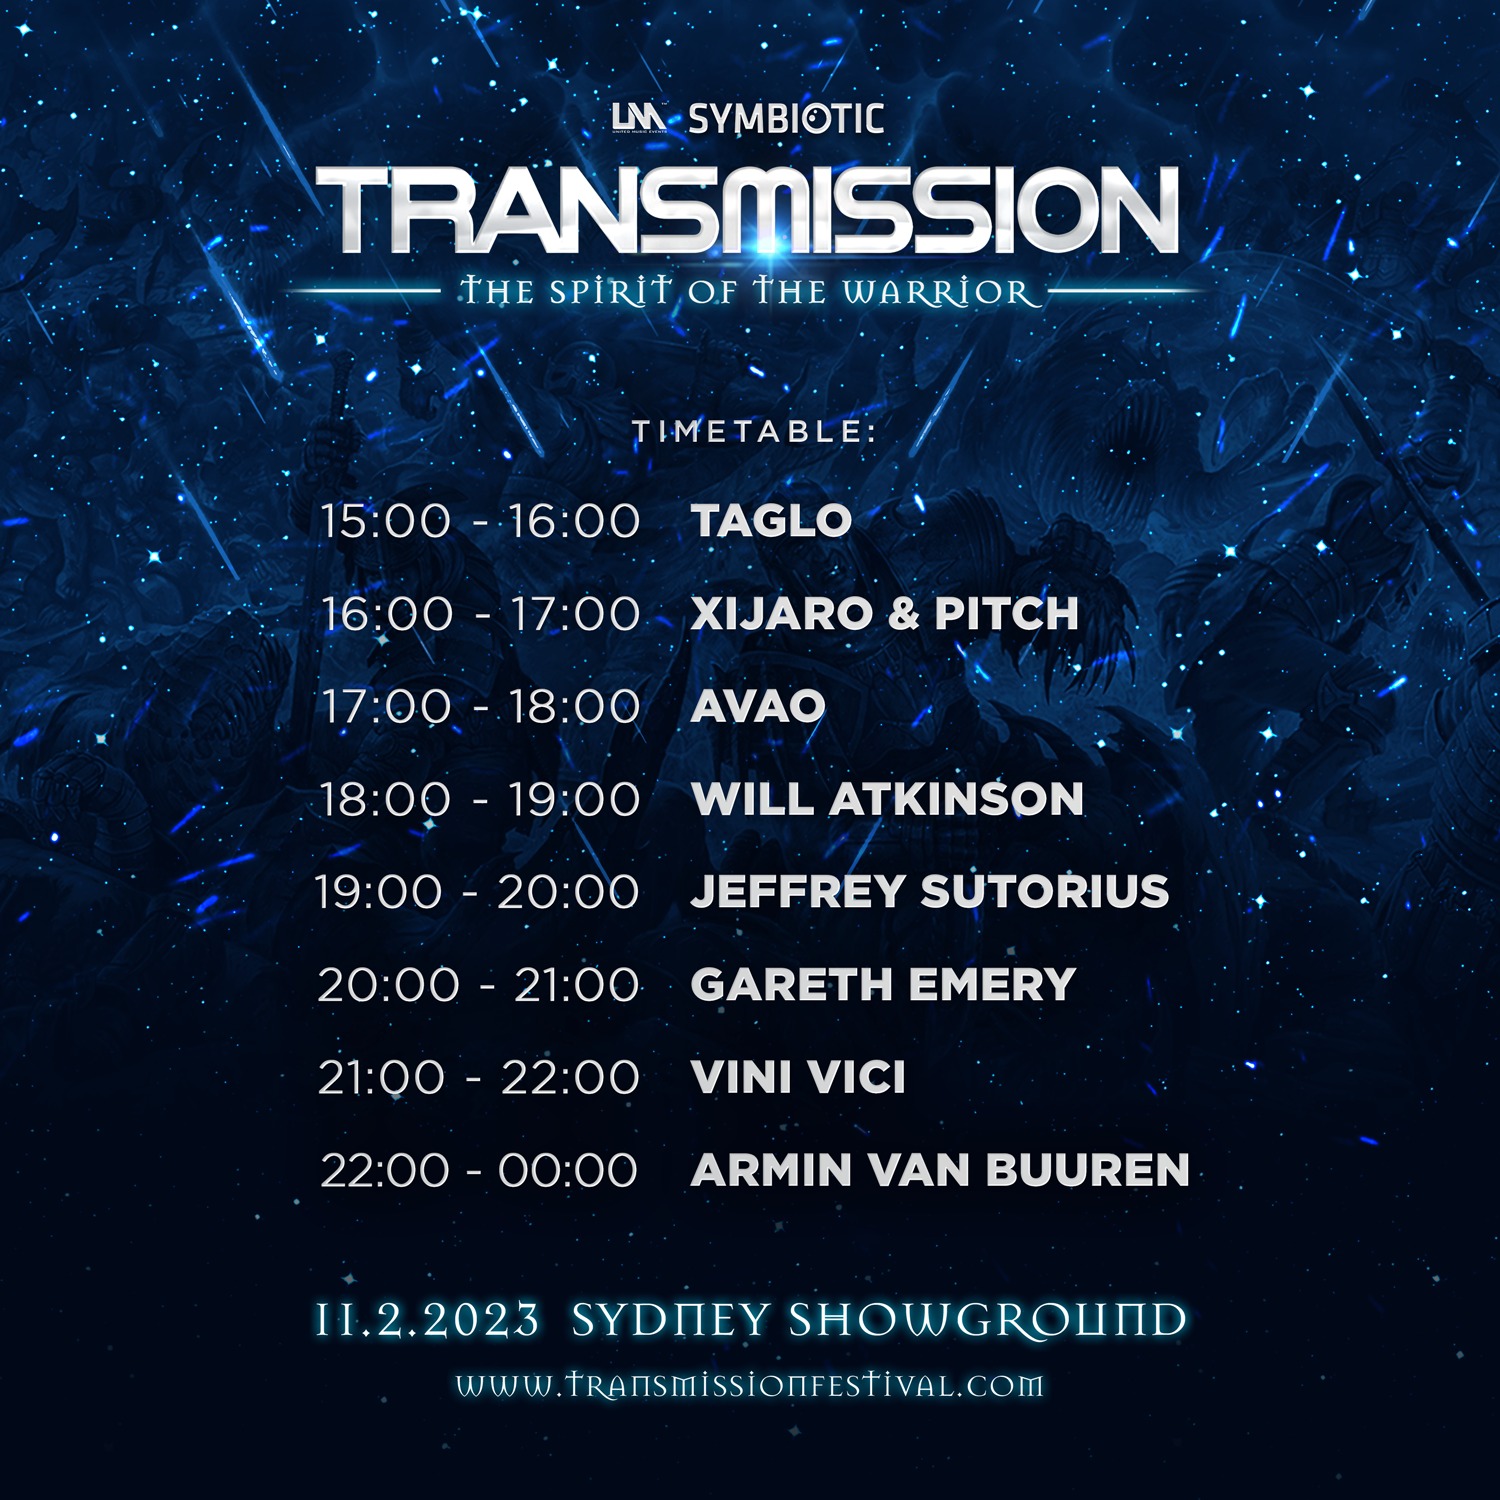 transmission-festival-sydney-2023-set-times